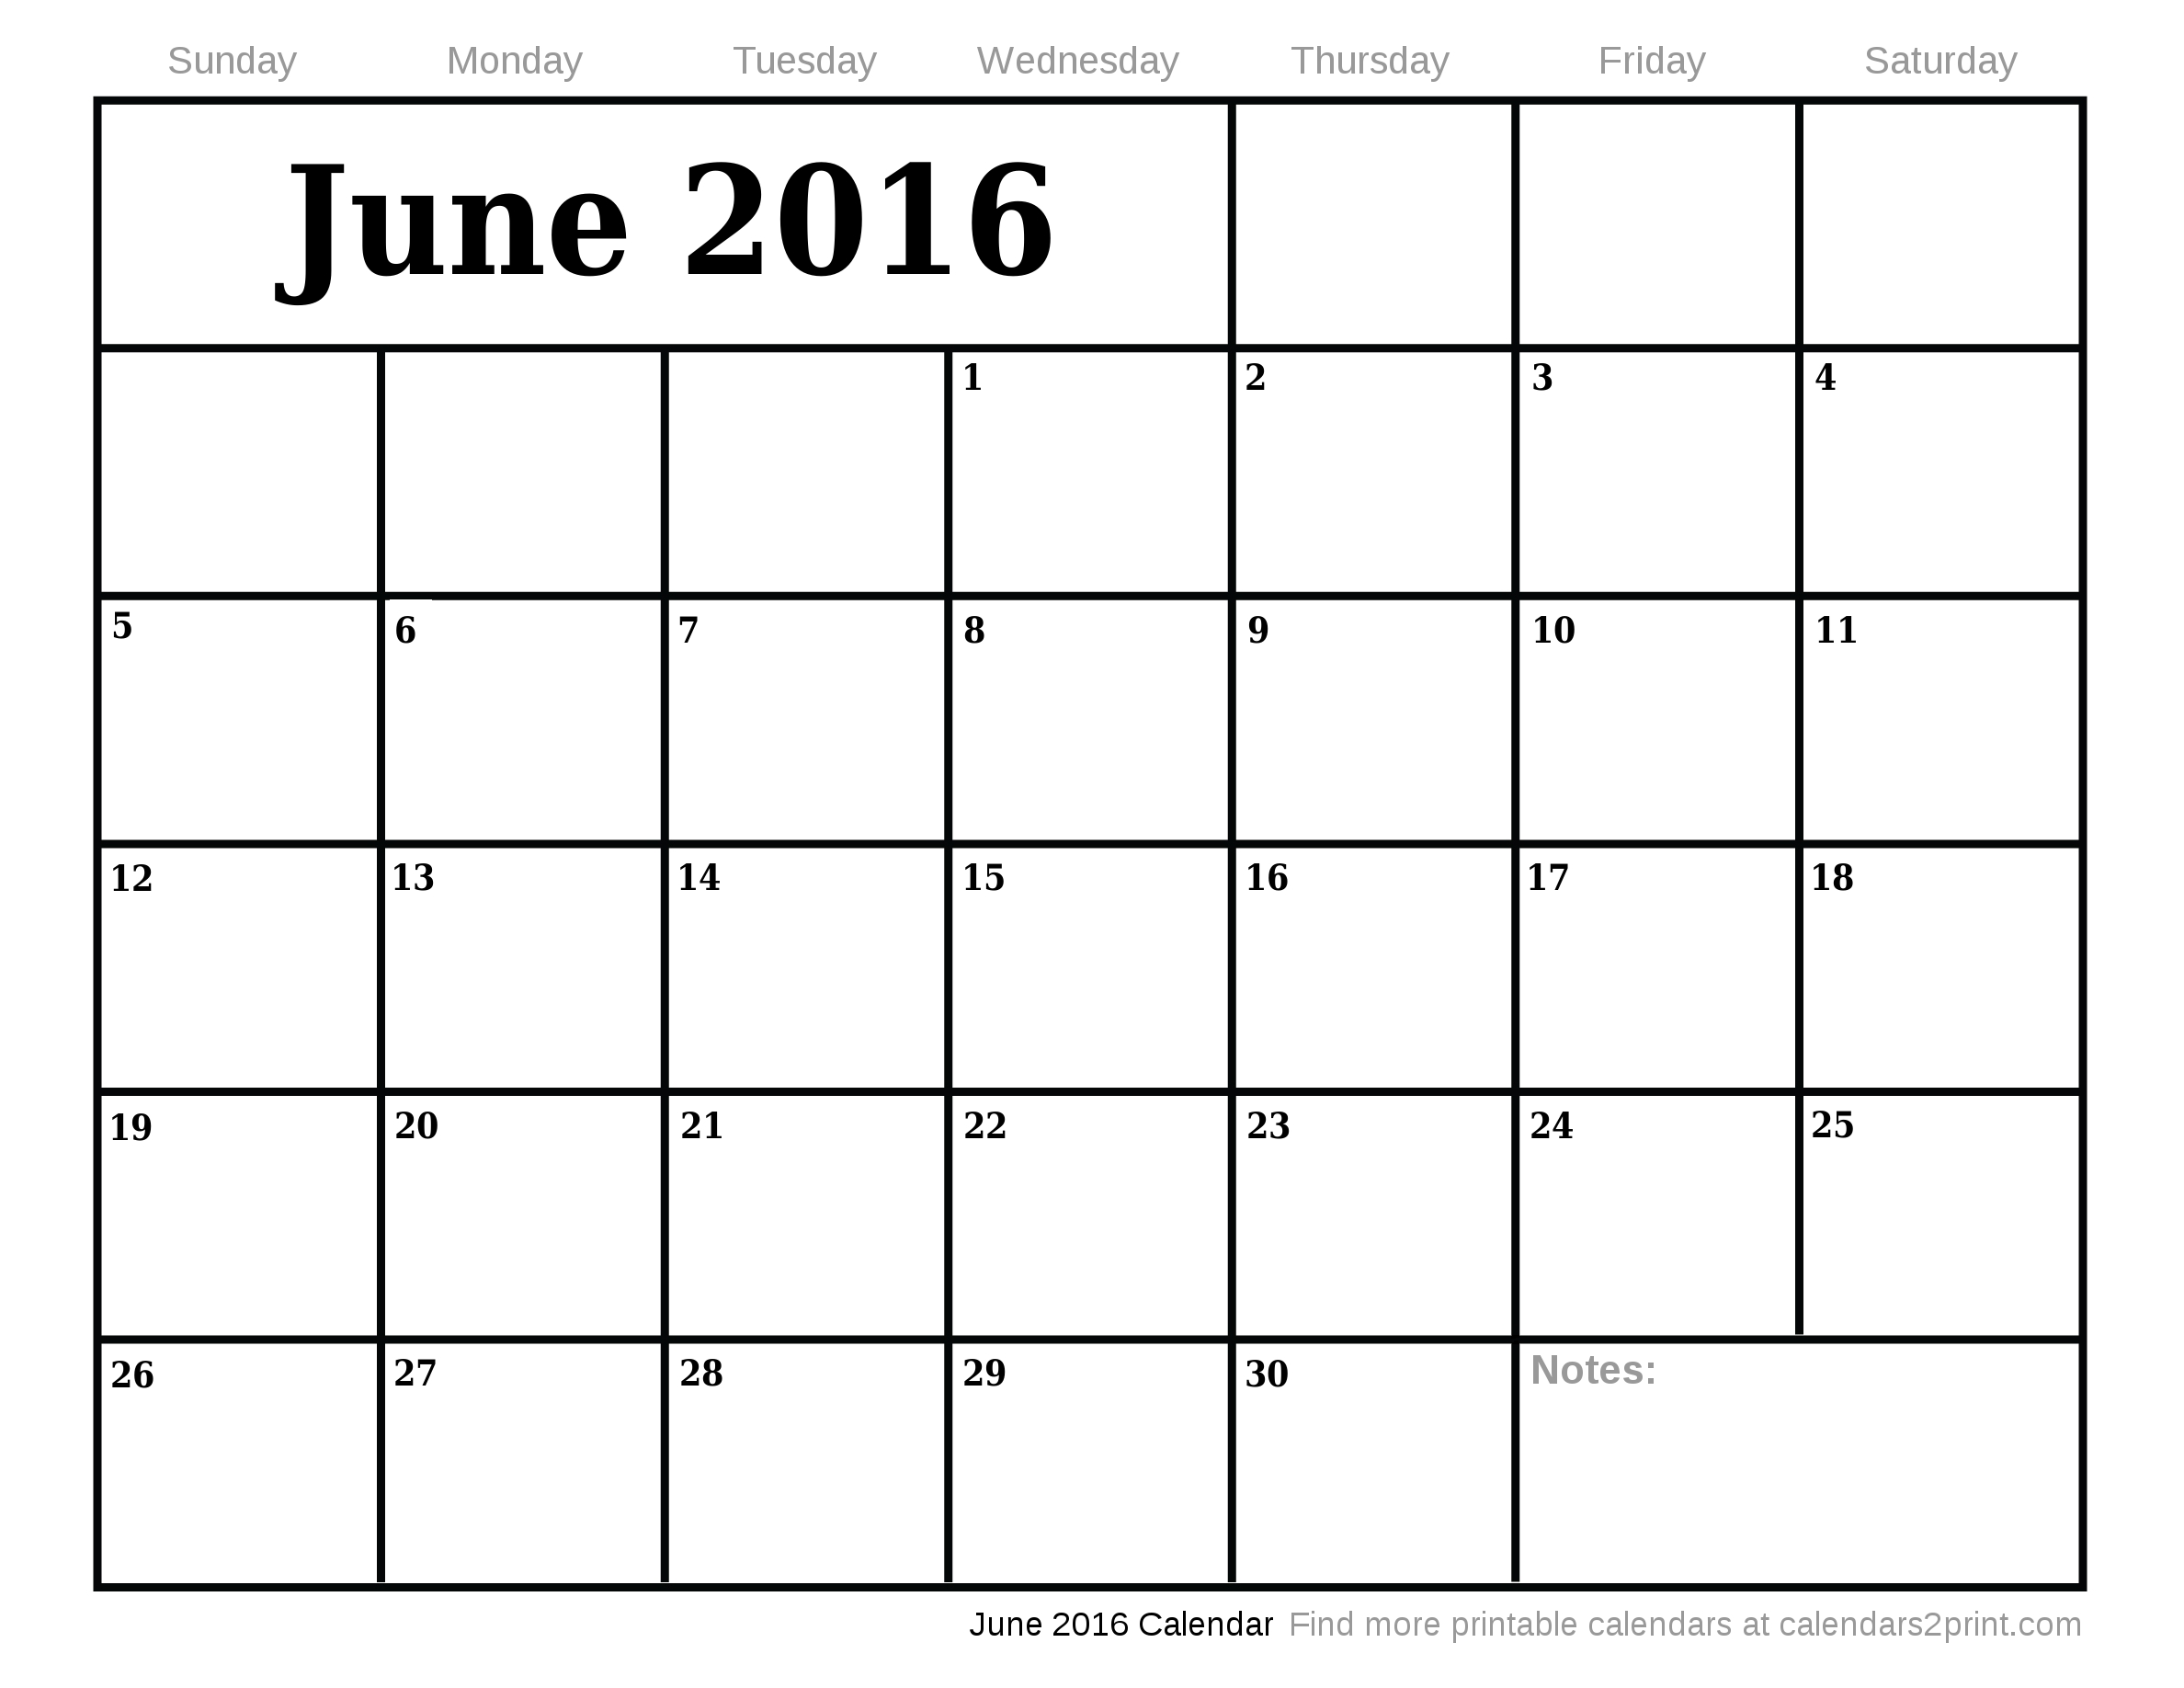 Jun 2016 Printable Calendar